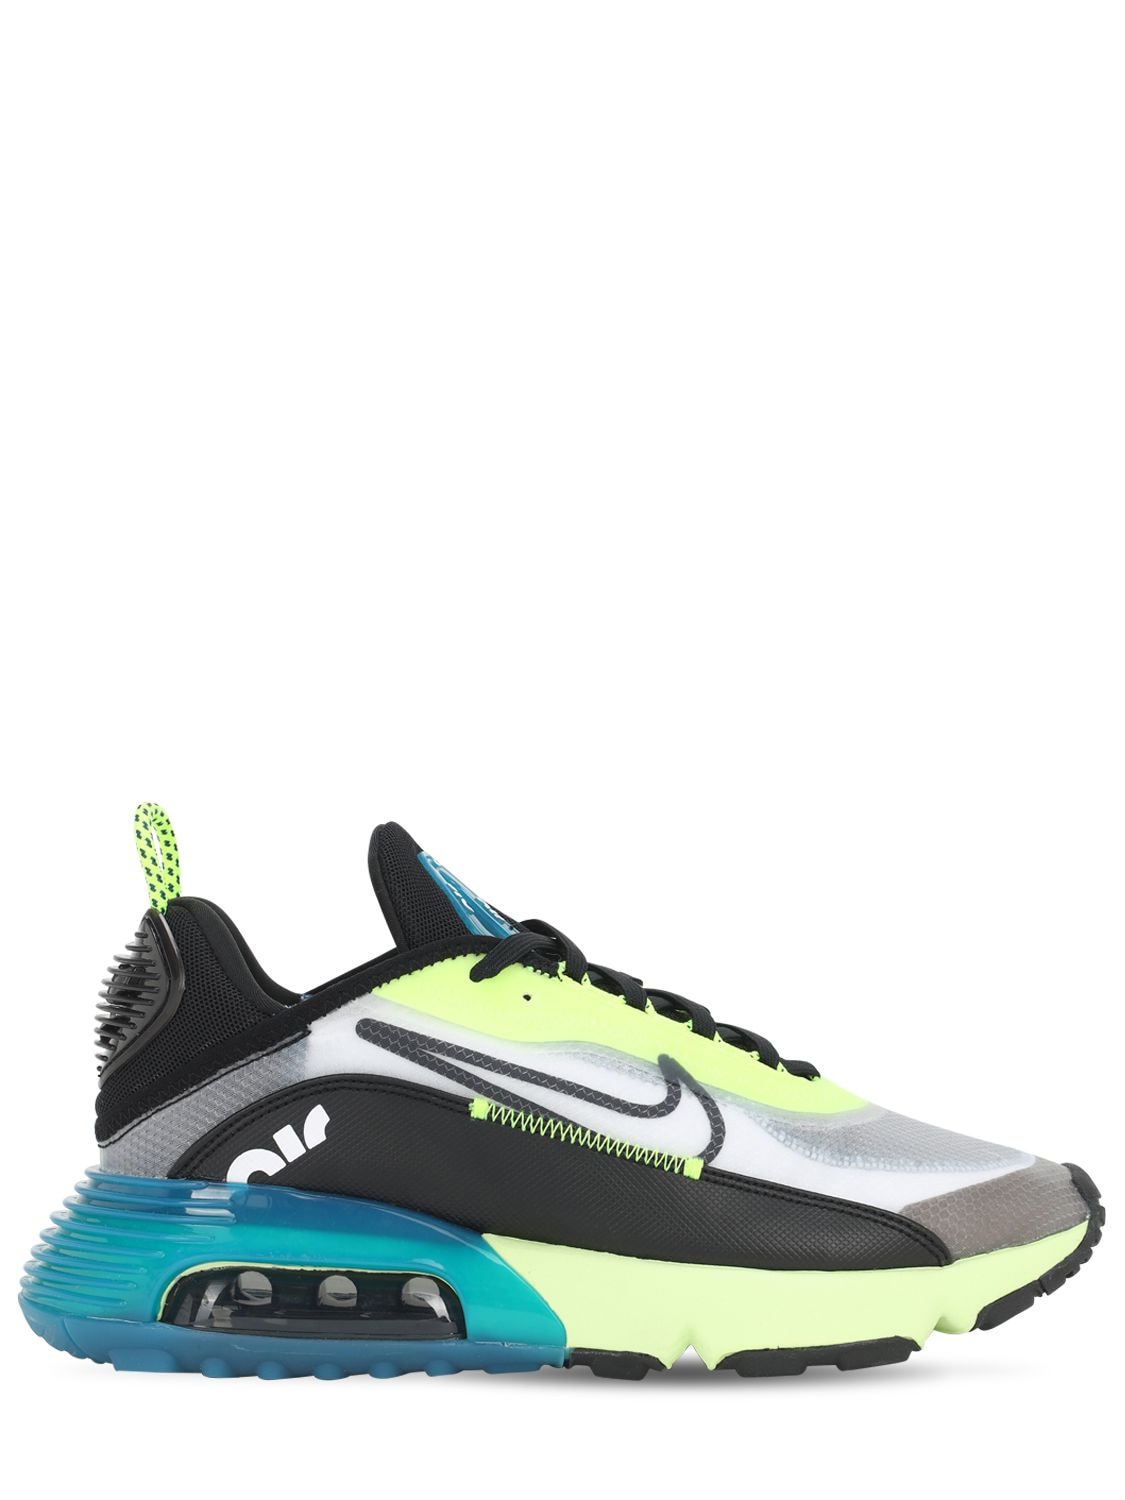 Nike Air Max 2090 Sneakers In Valerian Blue